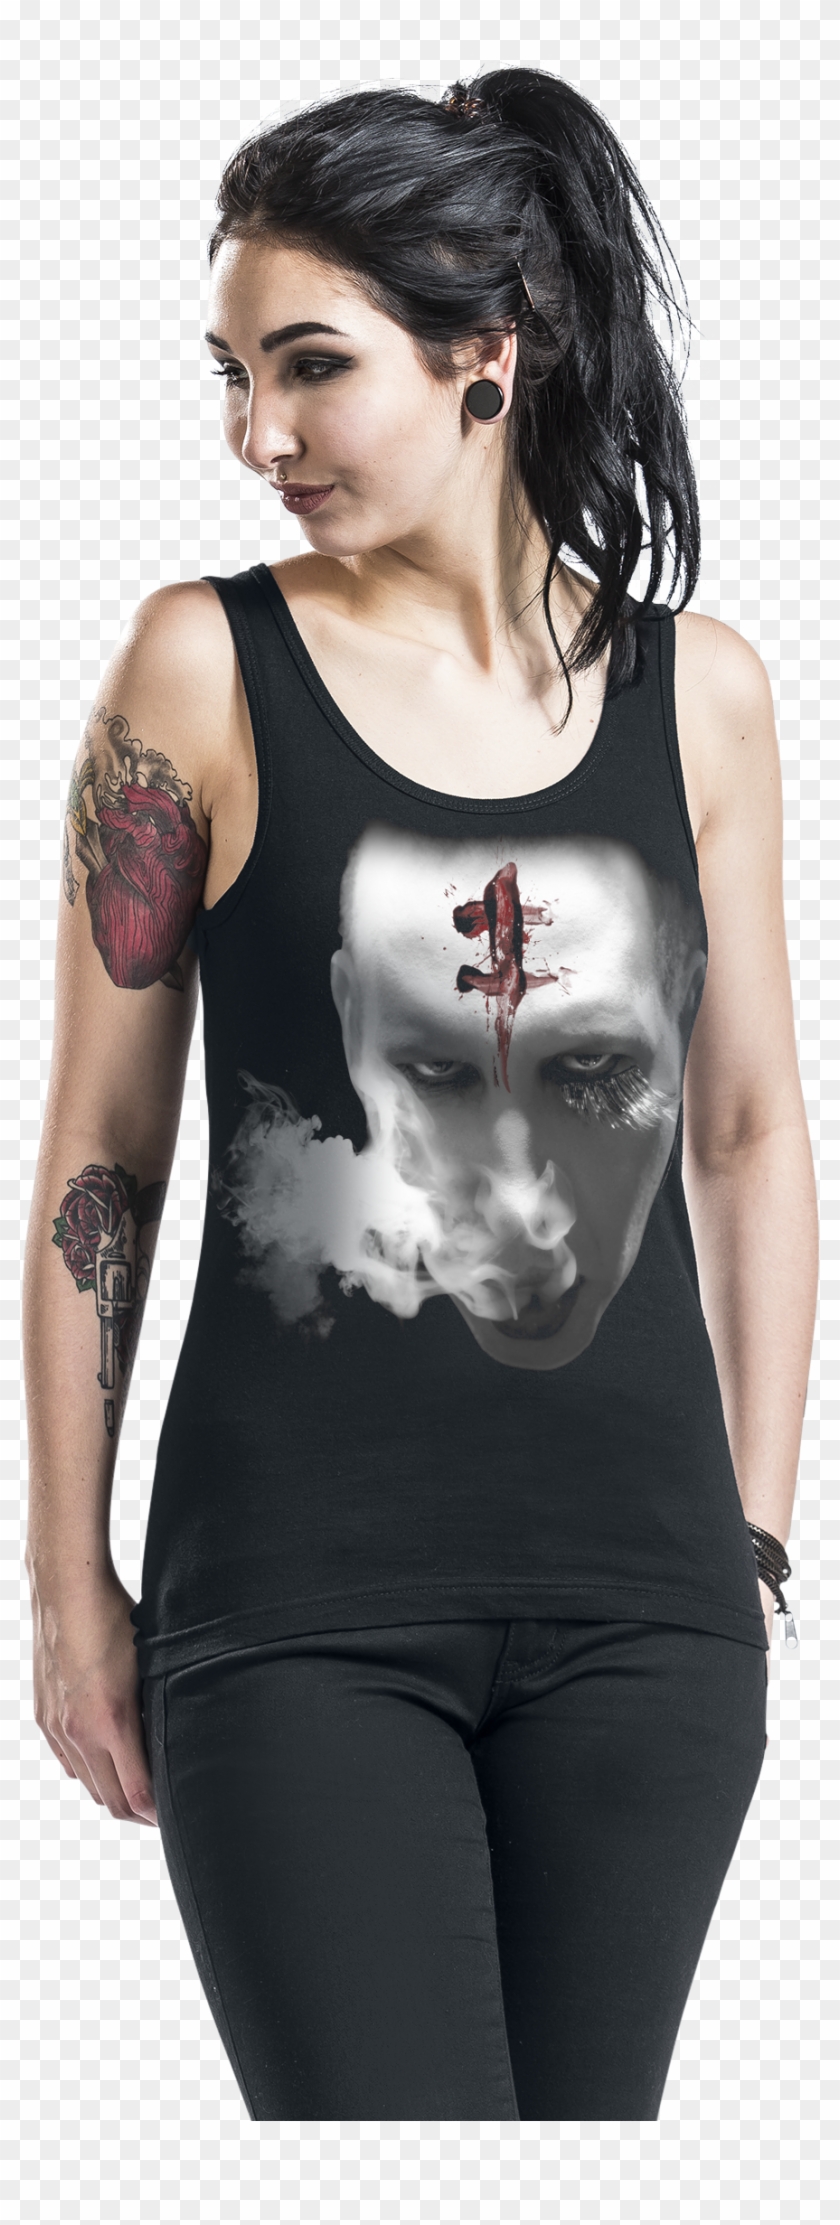 Marilyn Manson The Mark Girl Top Schwarz - Girl Clipart #4704791